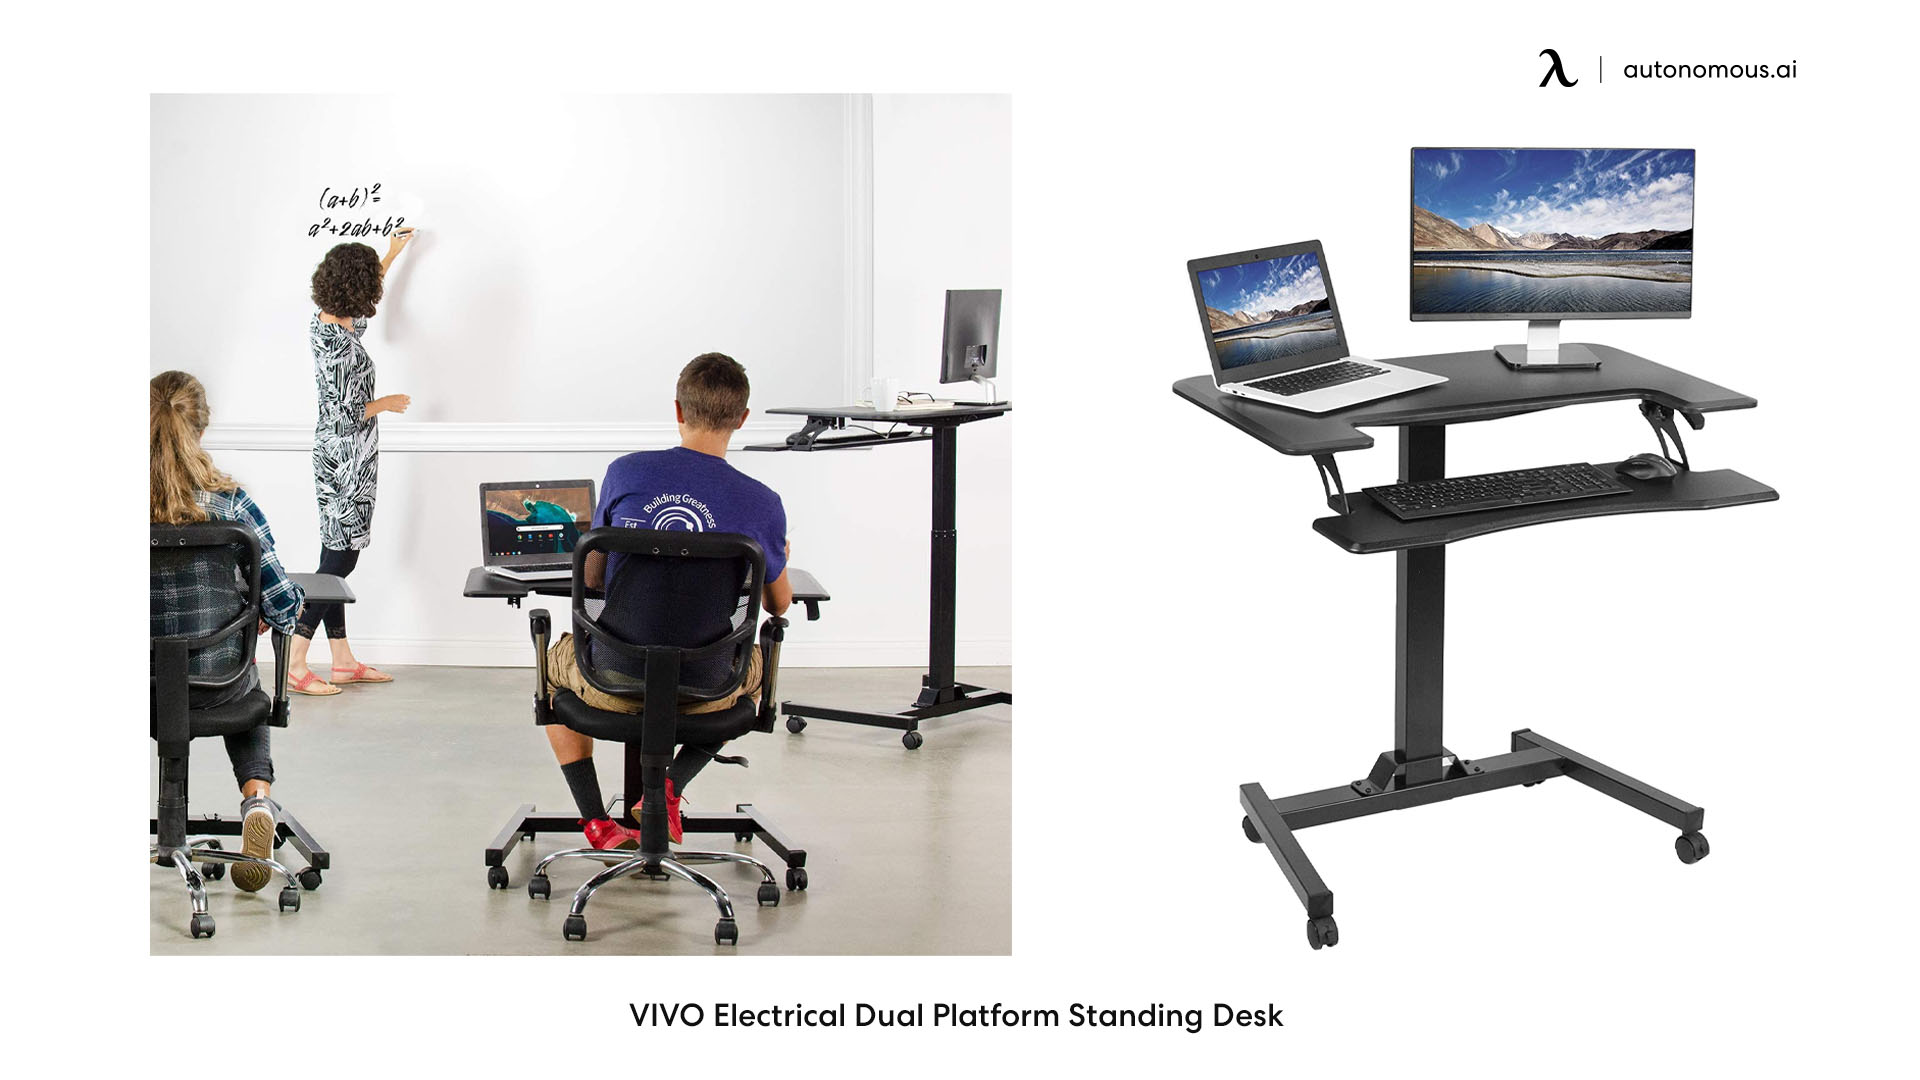 VIVO Electrical Dual Platform Standing Desk